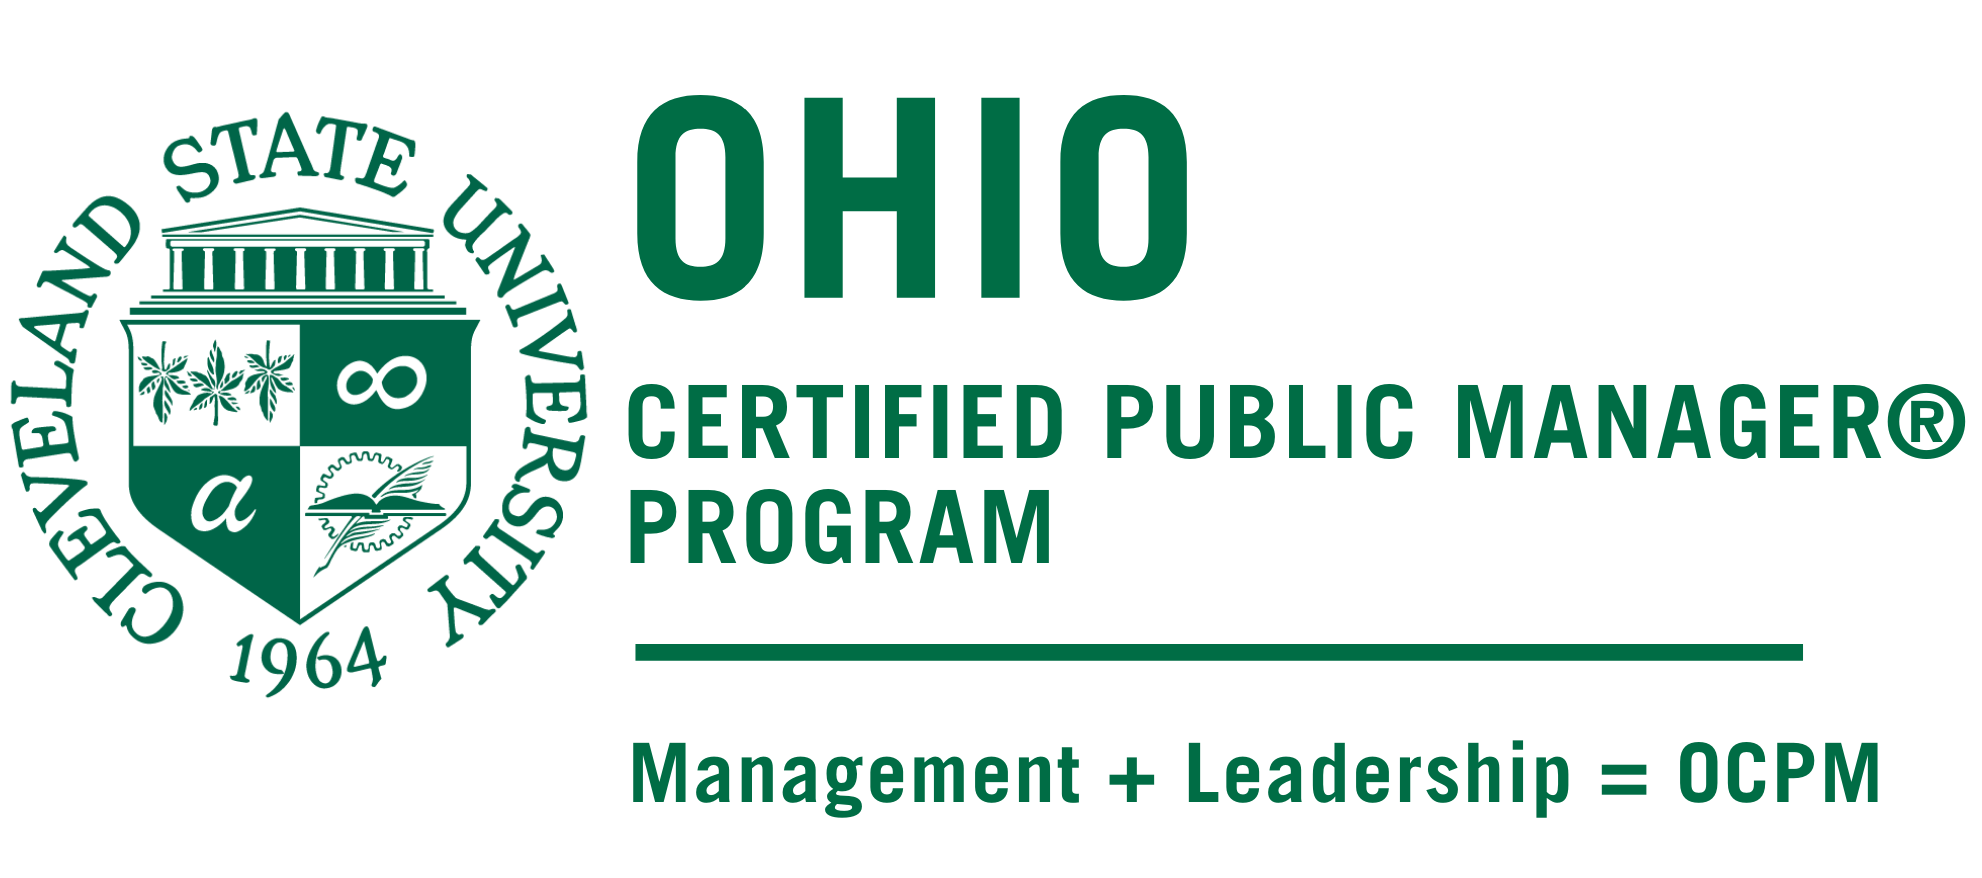 Ohio Certified Public Manager Program